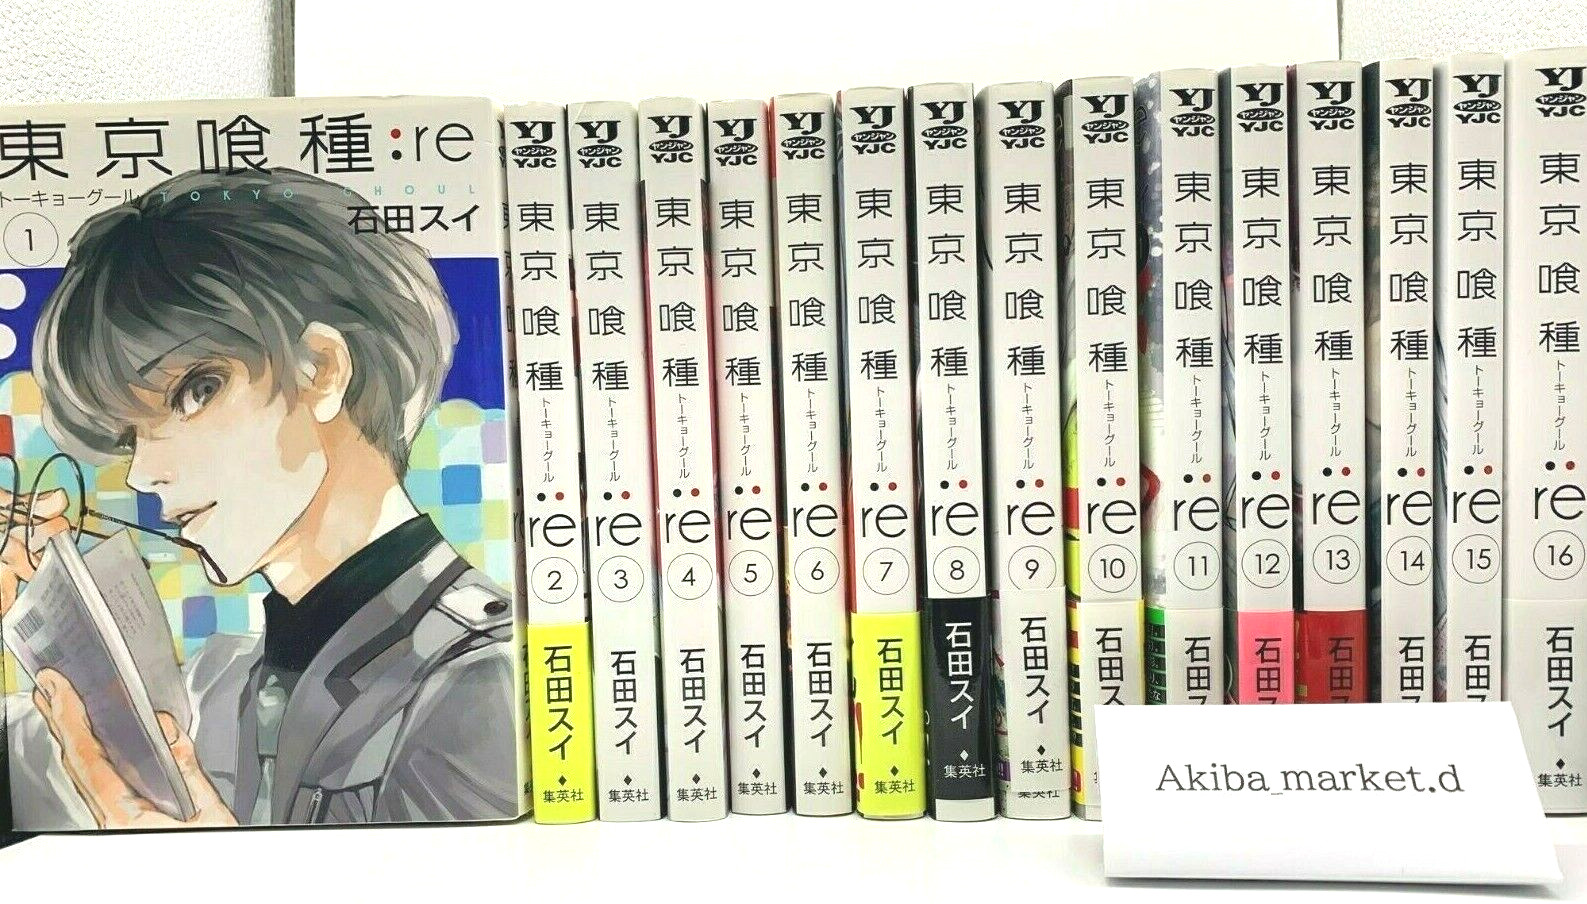 Tokyo Ghoul :re Japanese language  Vol.1-16  complete Full Set  Manga comics